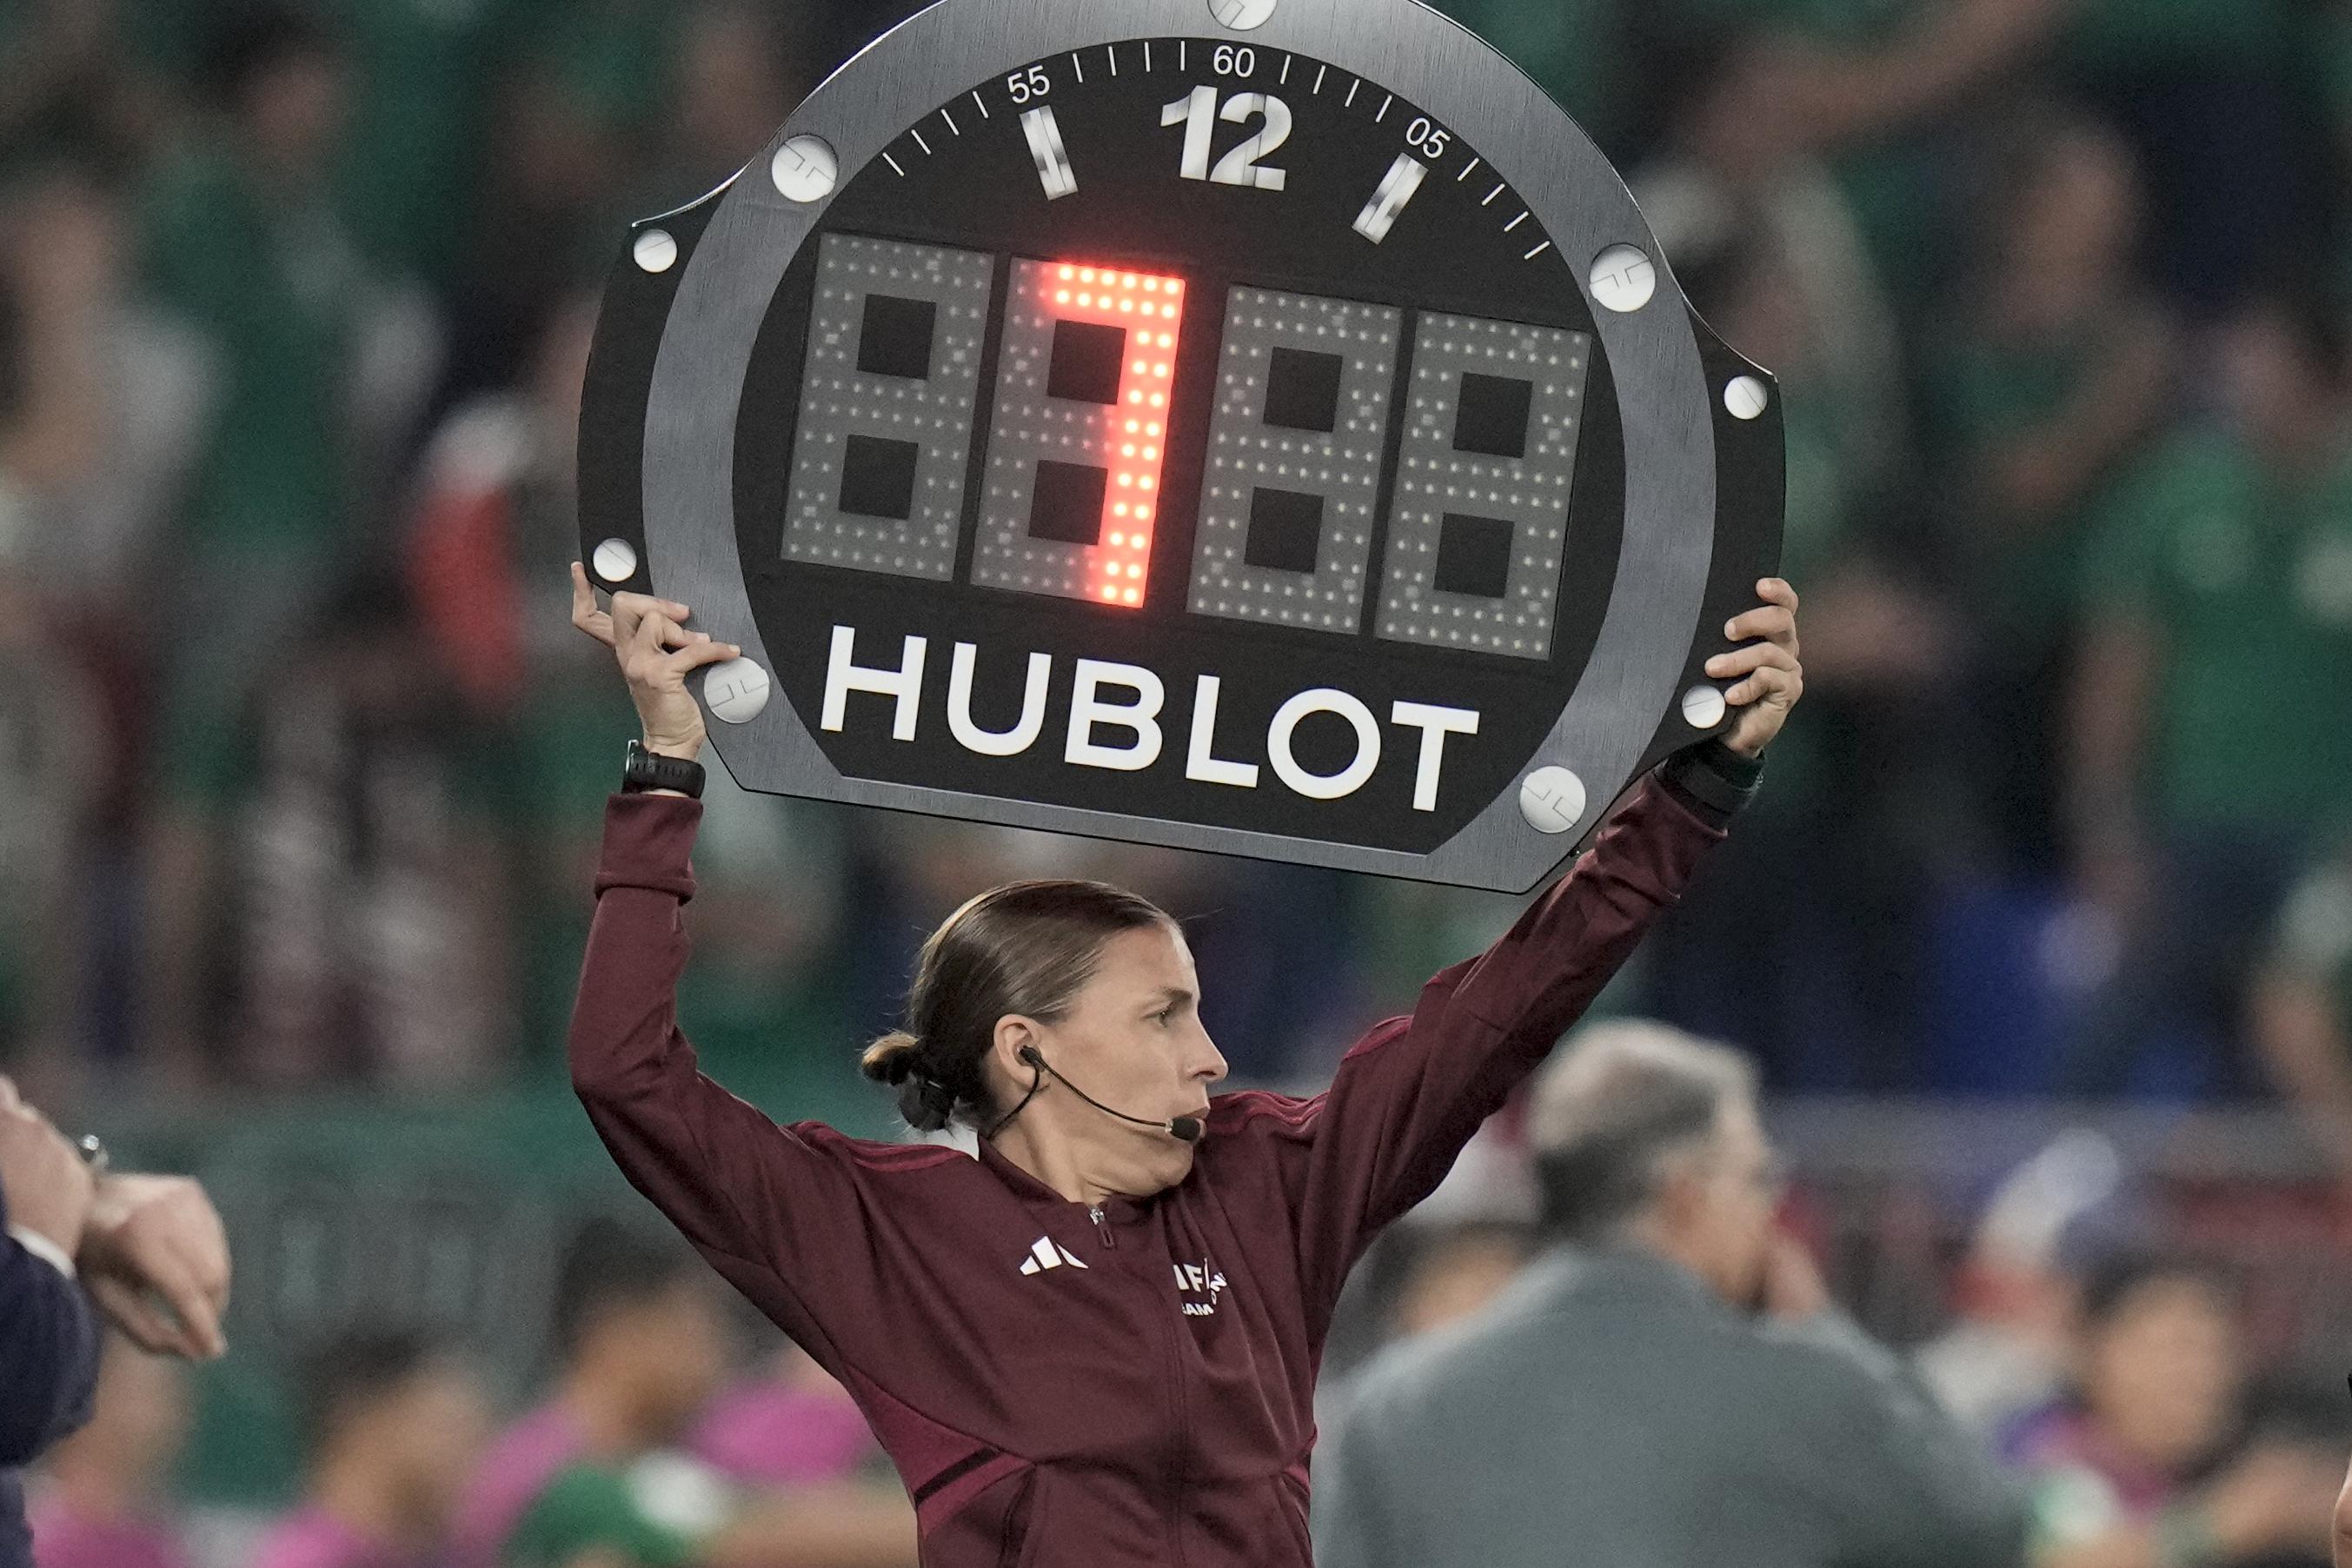 Hublot and the referee board. – Soccer Politics / The Politics of Football